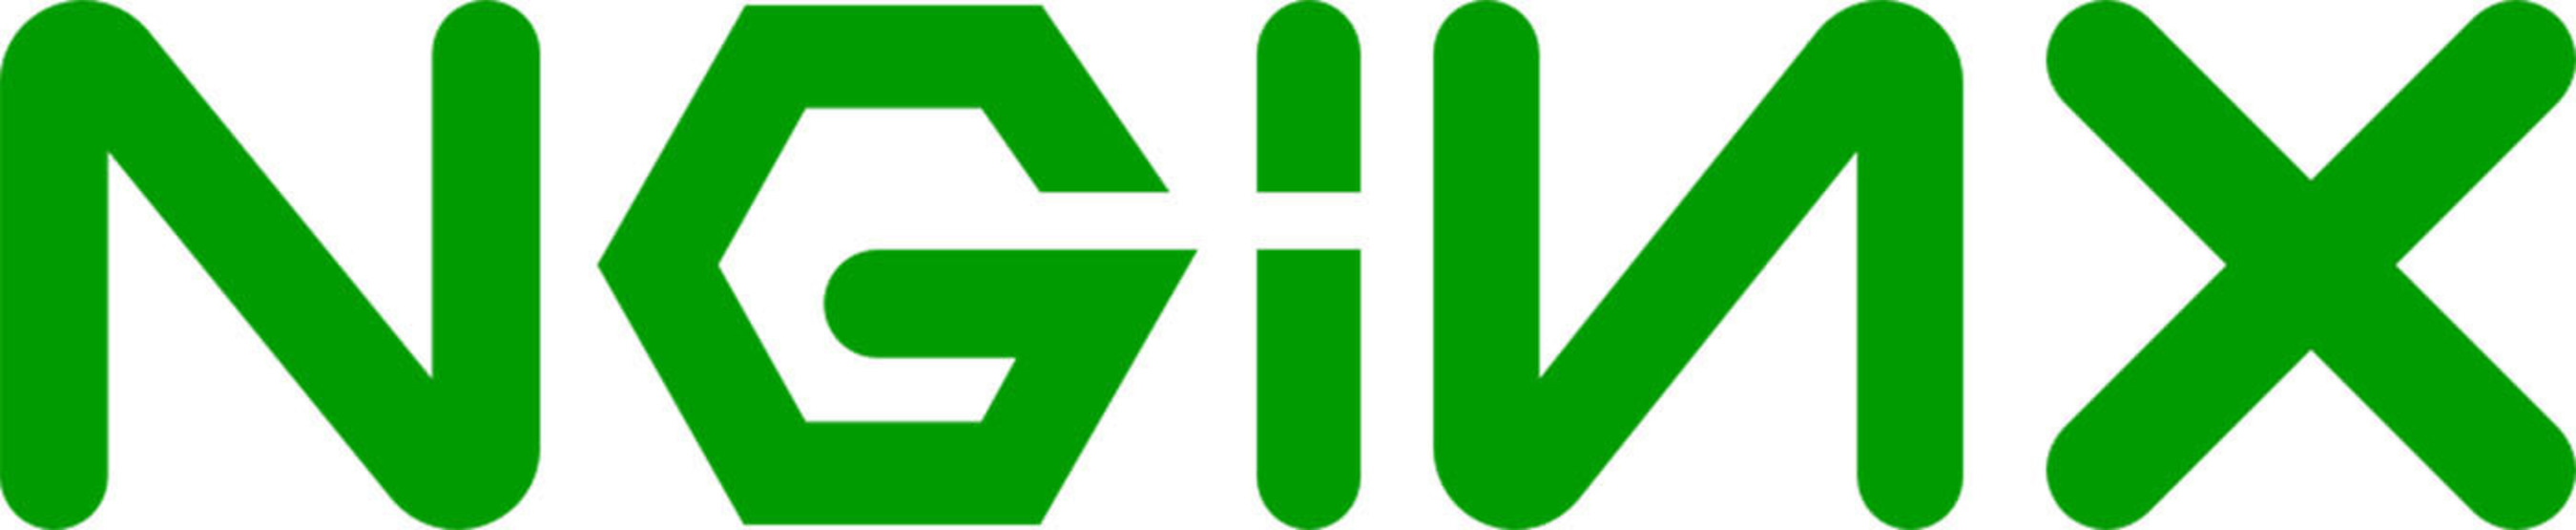 NGINX Logo (PRNewsFoto/NGINX, Inc.)